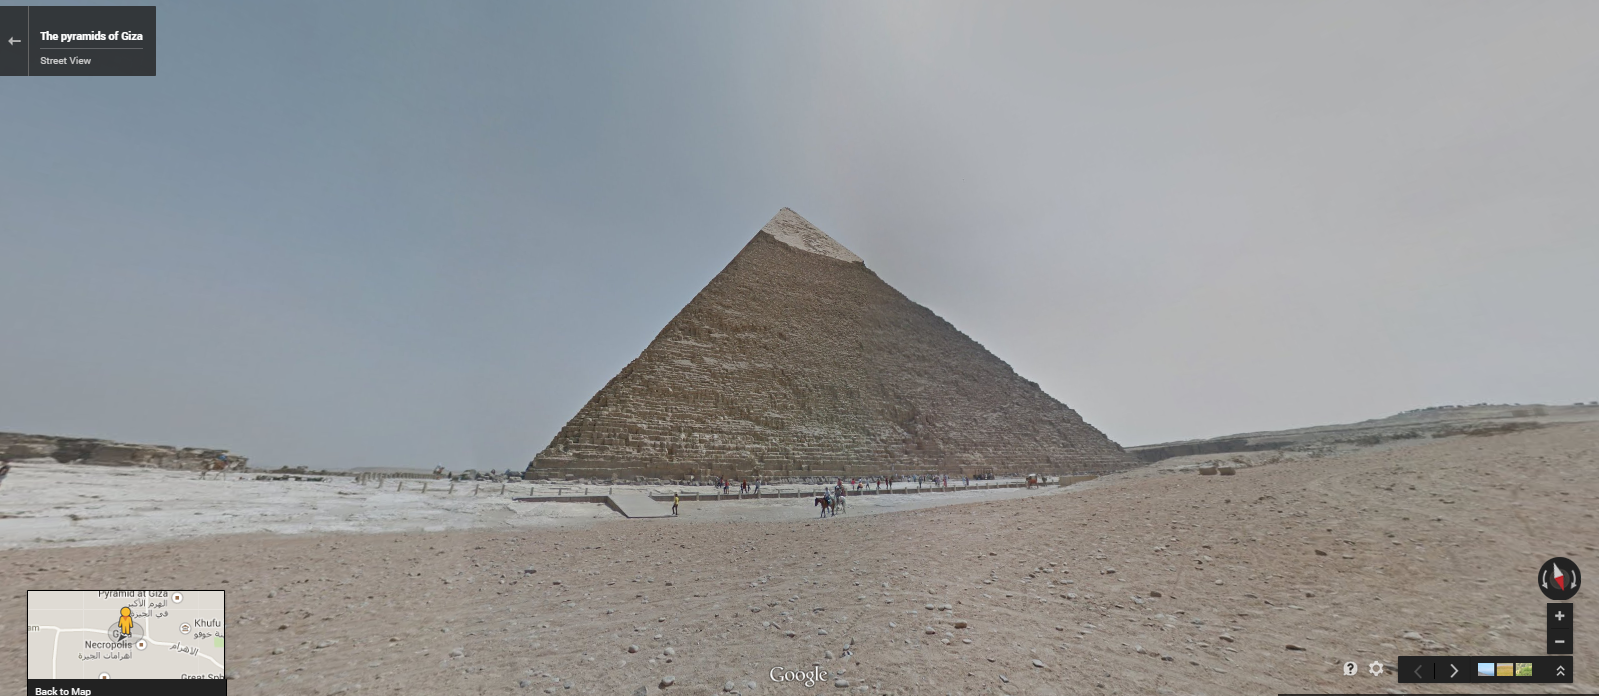 The Pyramid of Khafre in Giza.